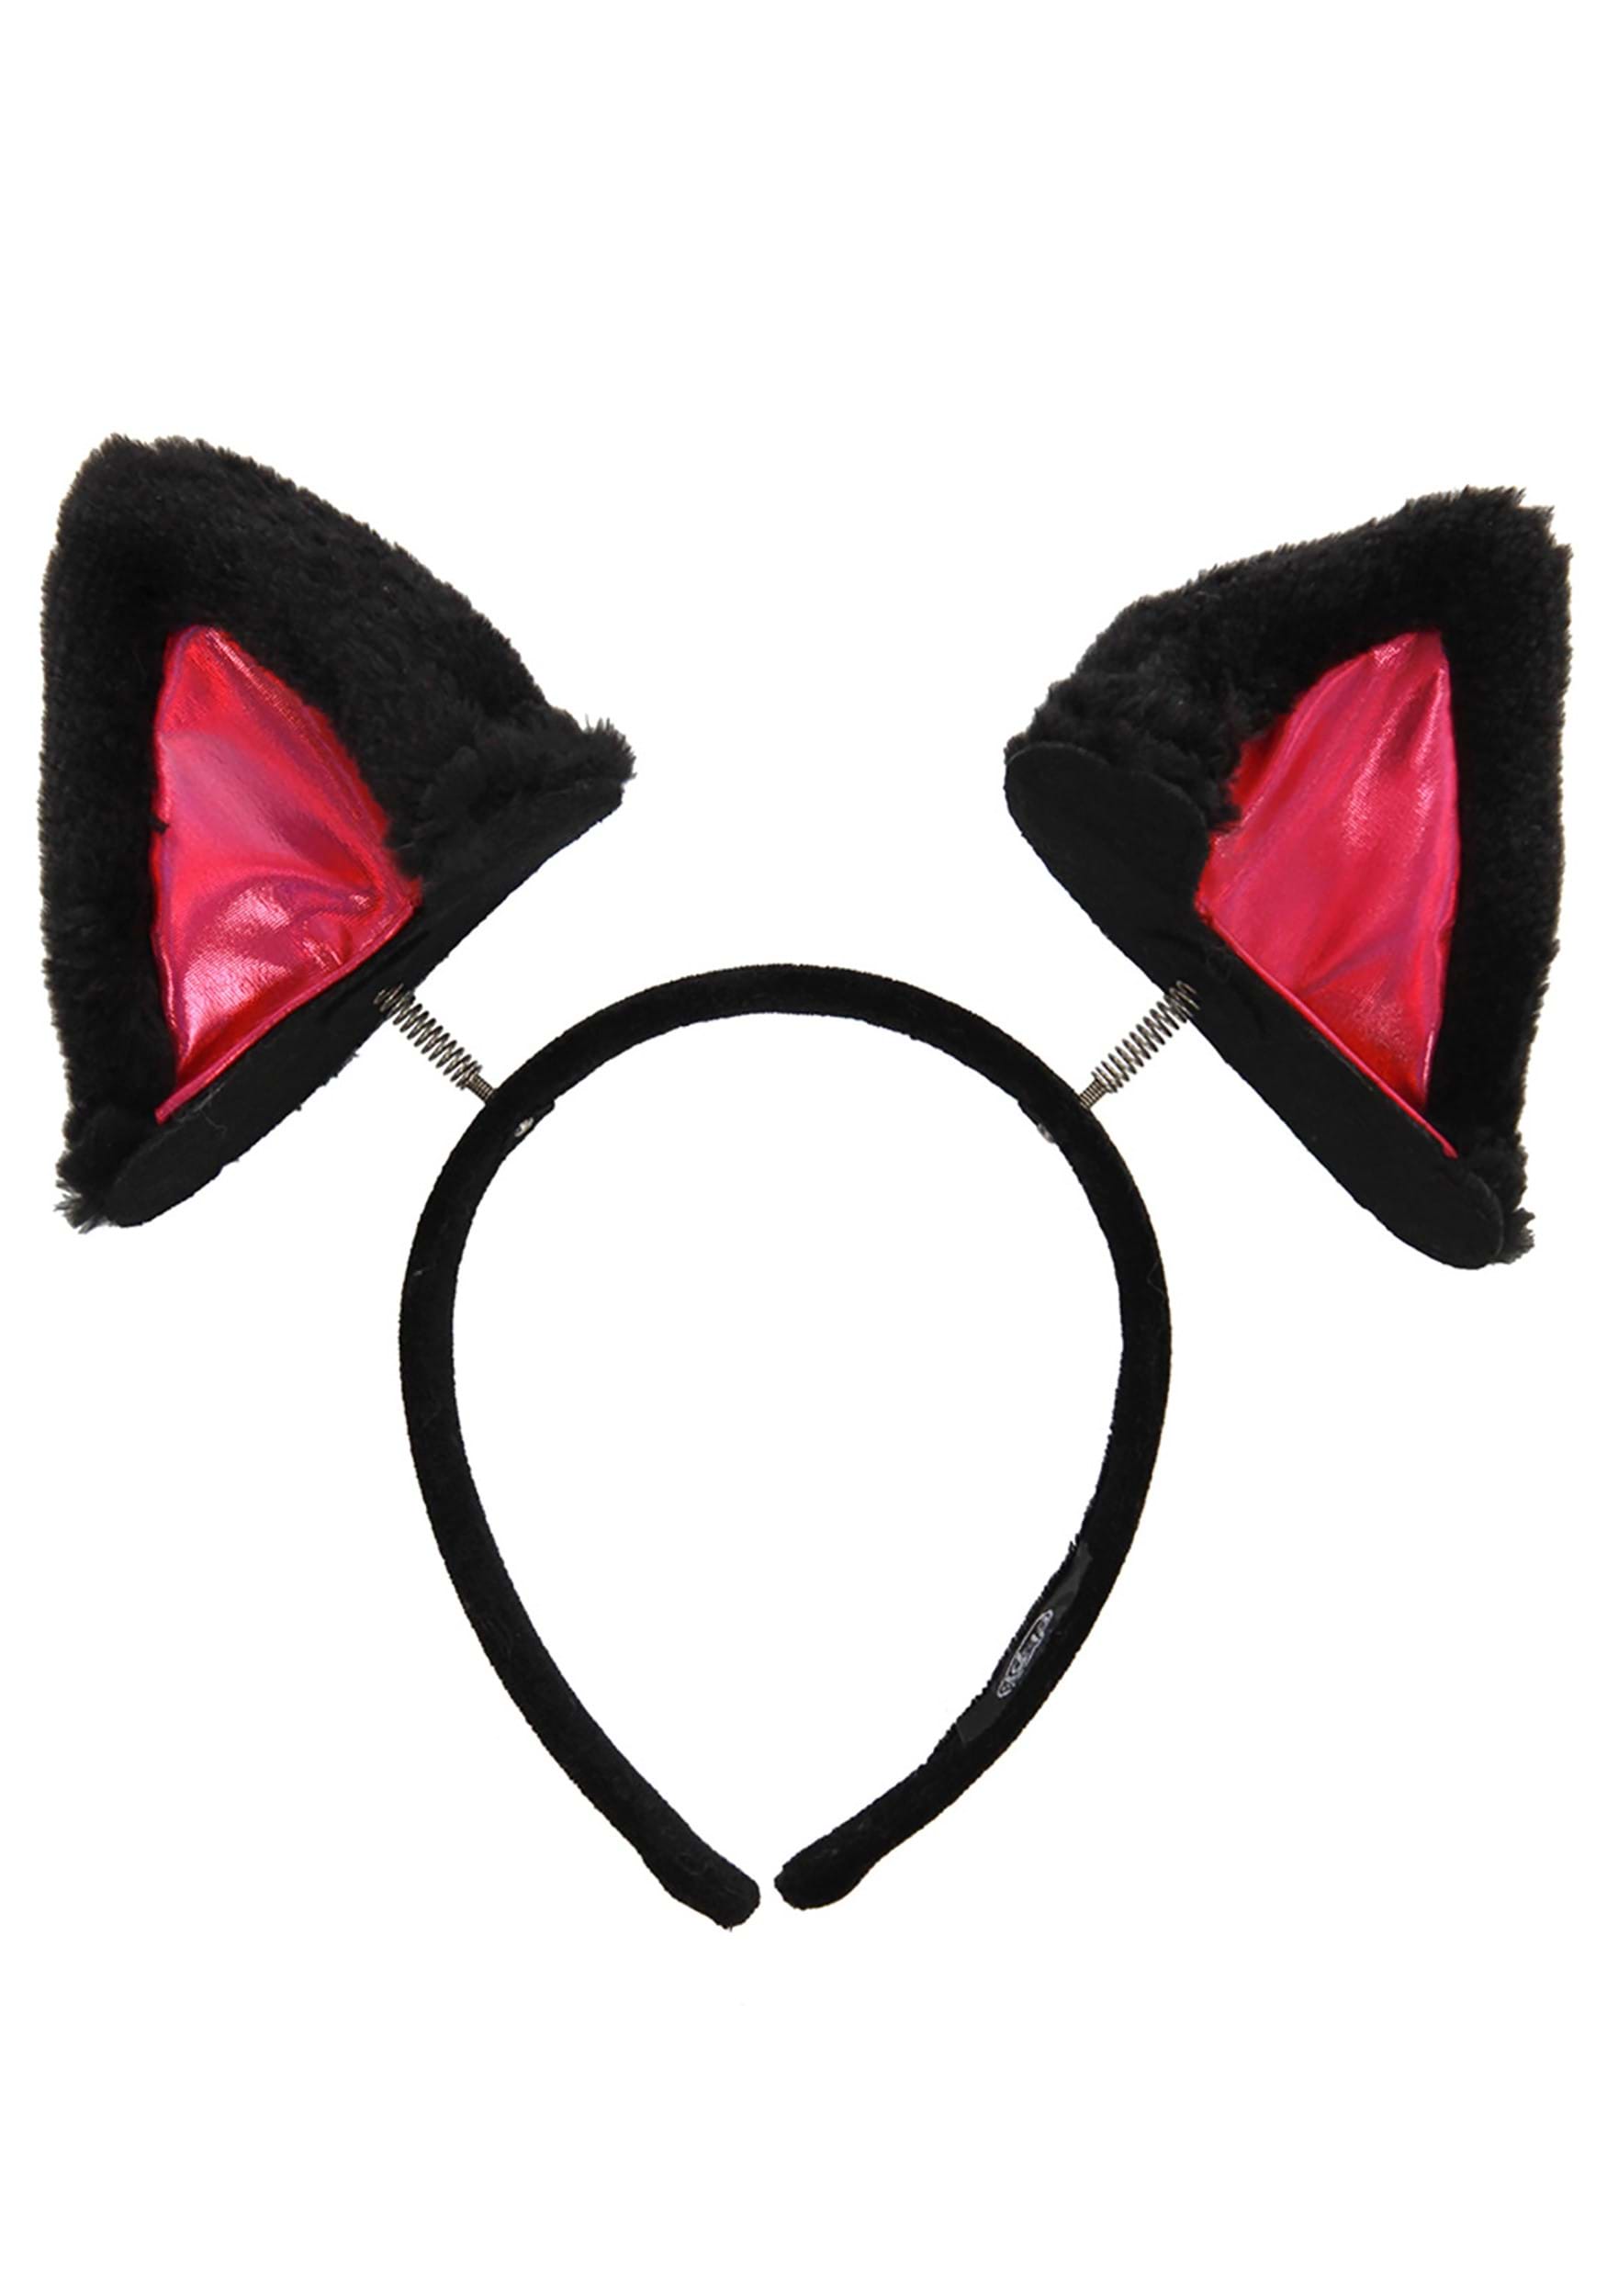 Springy Cat Ears Plush Soft Headband Costume